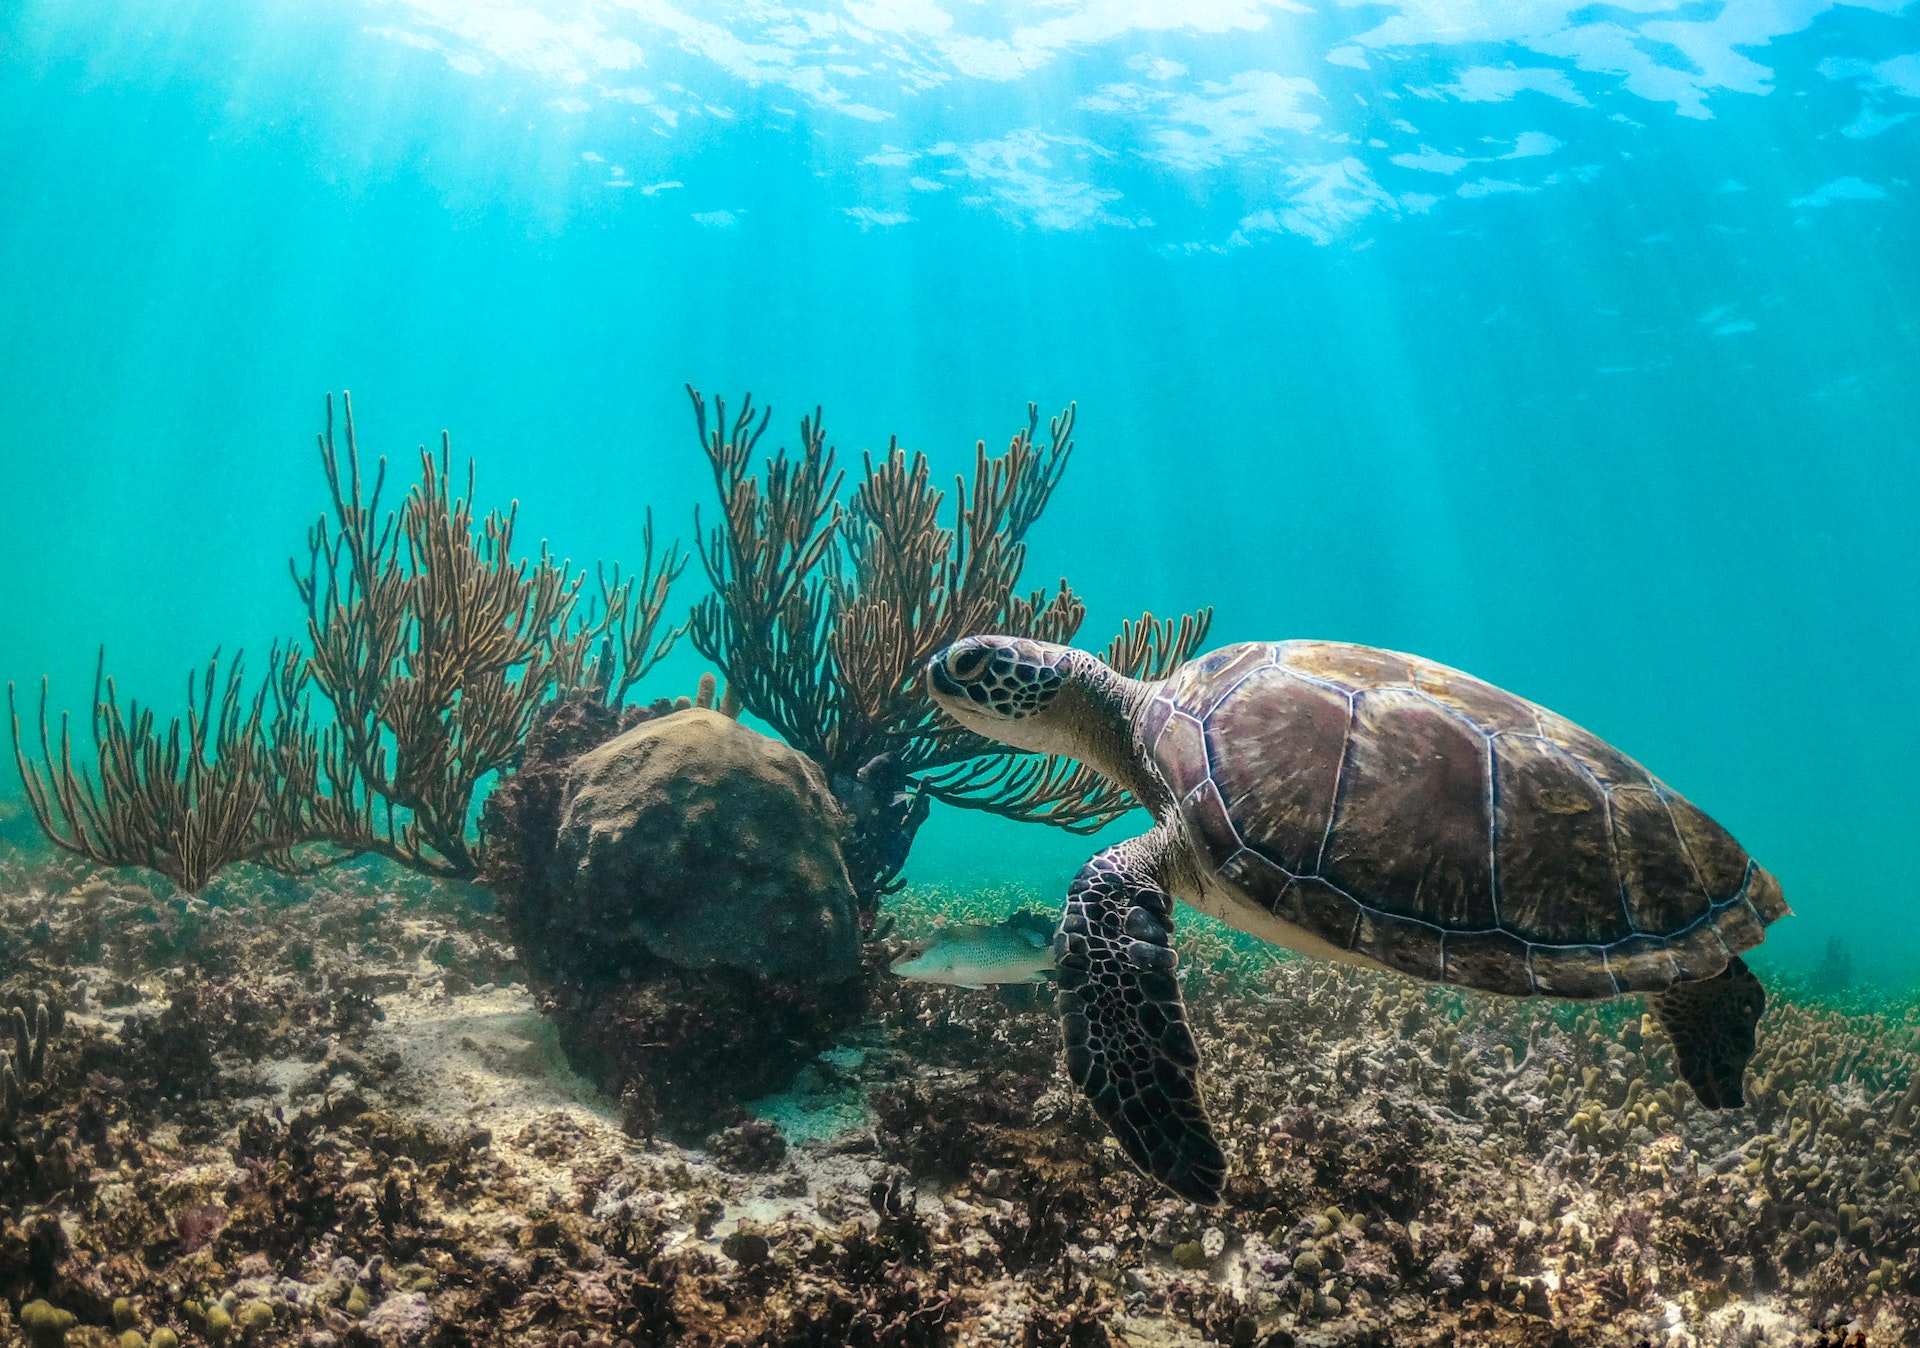 Sea turtles in clear blue water.